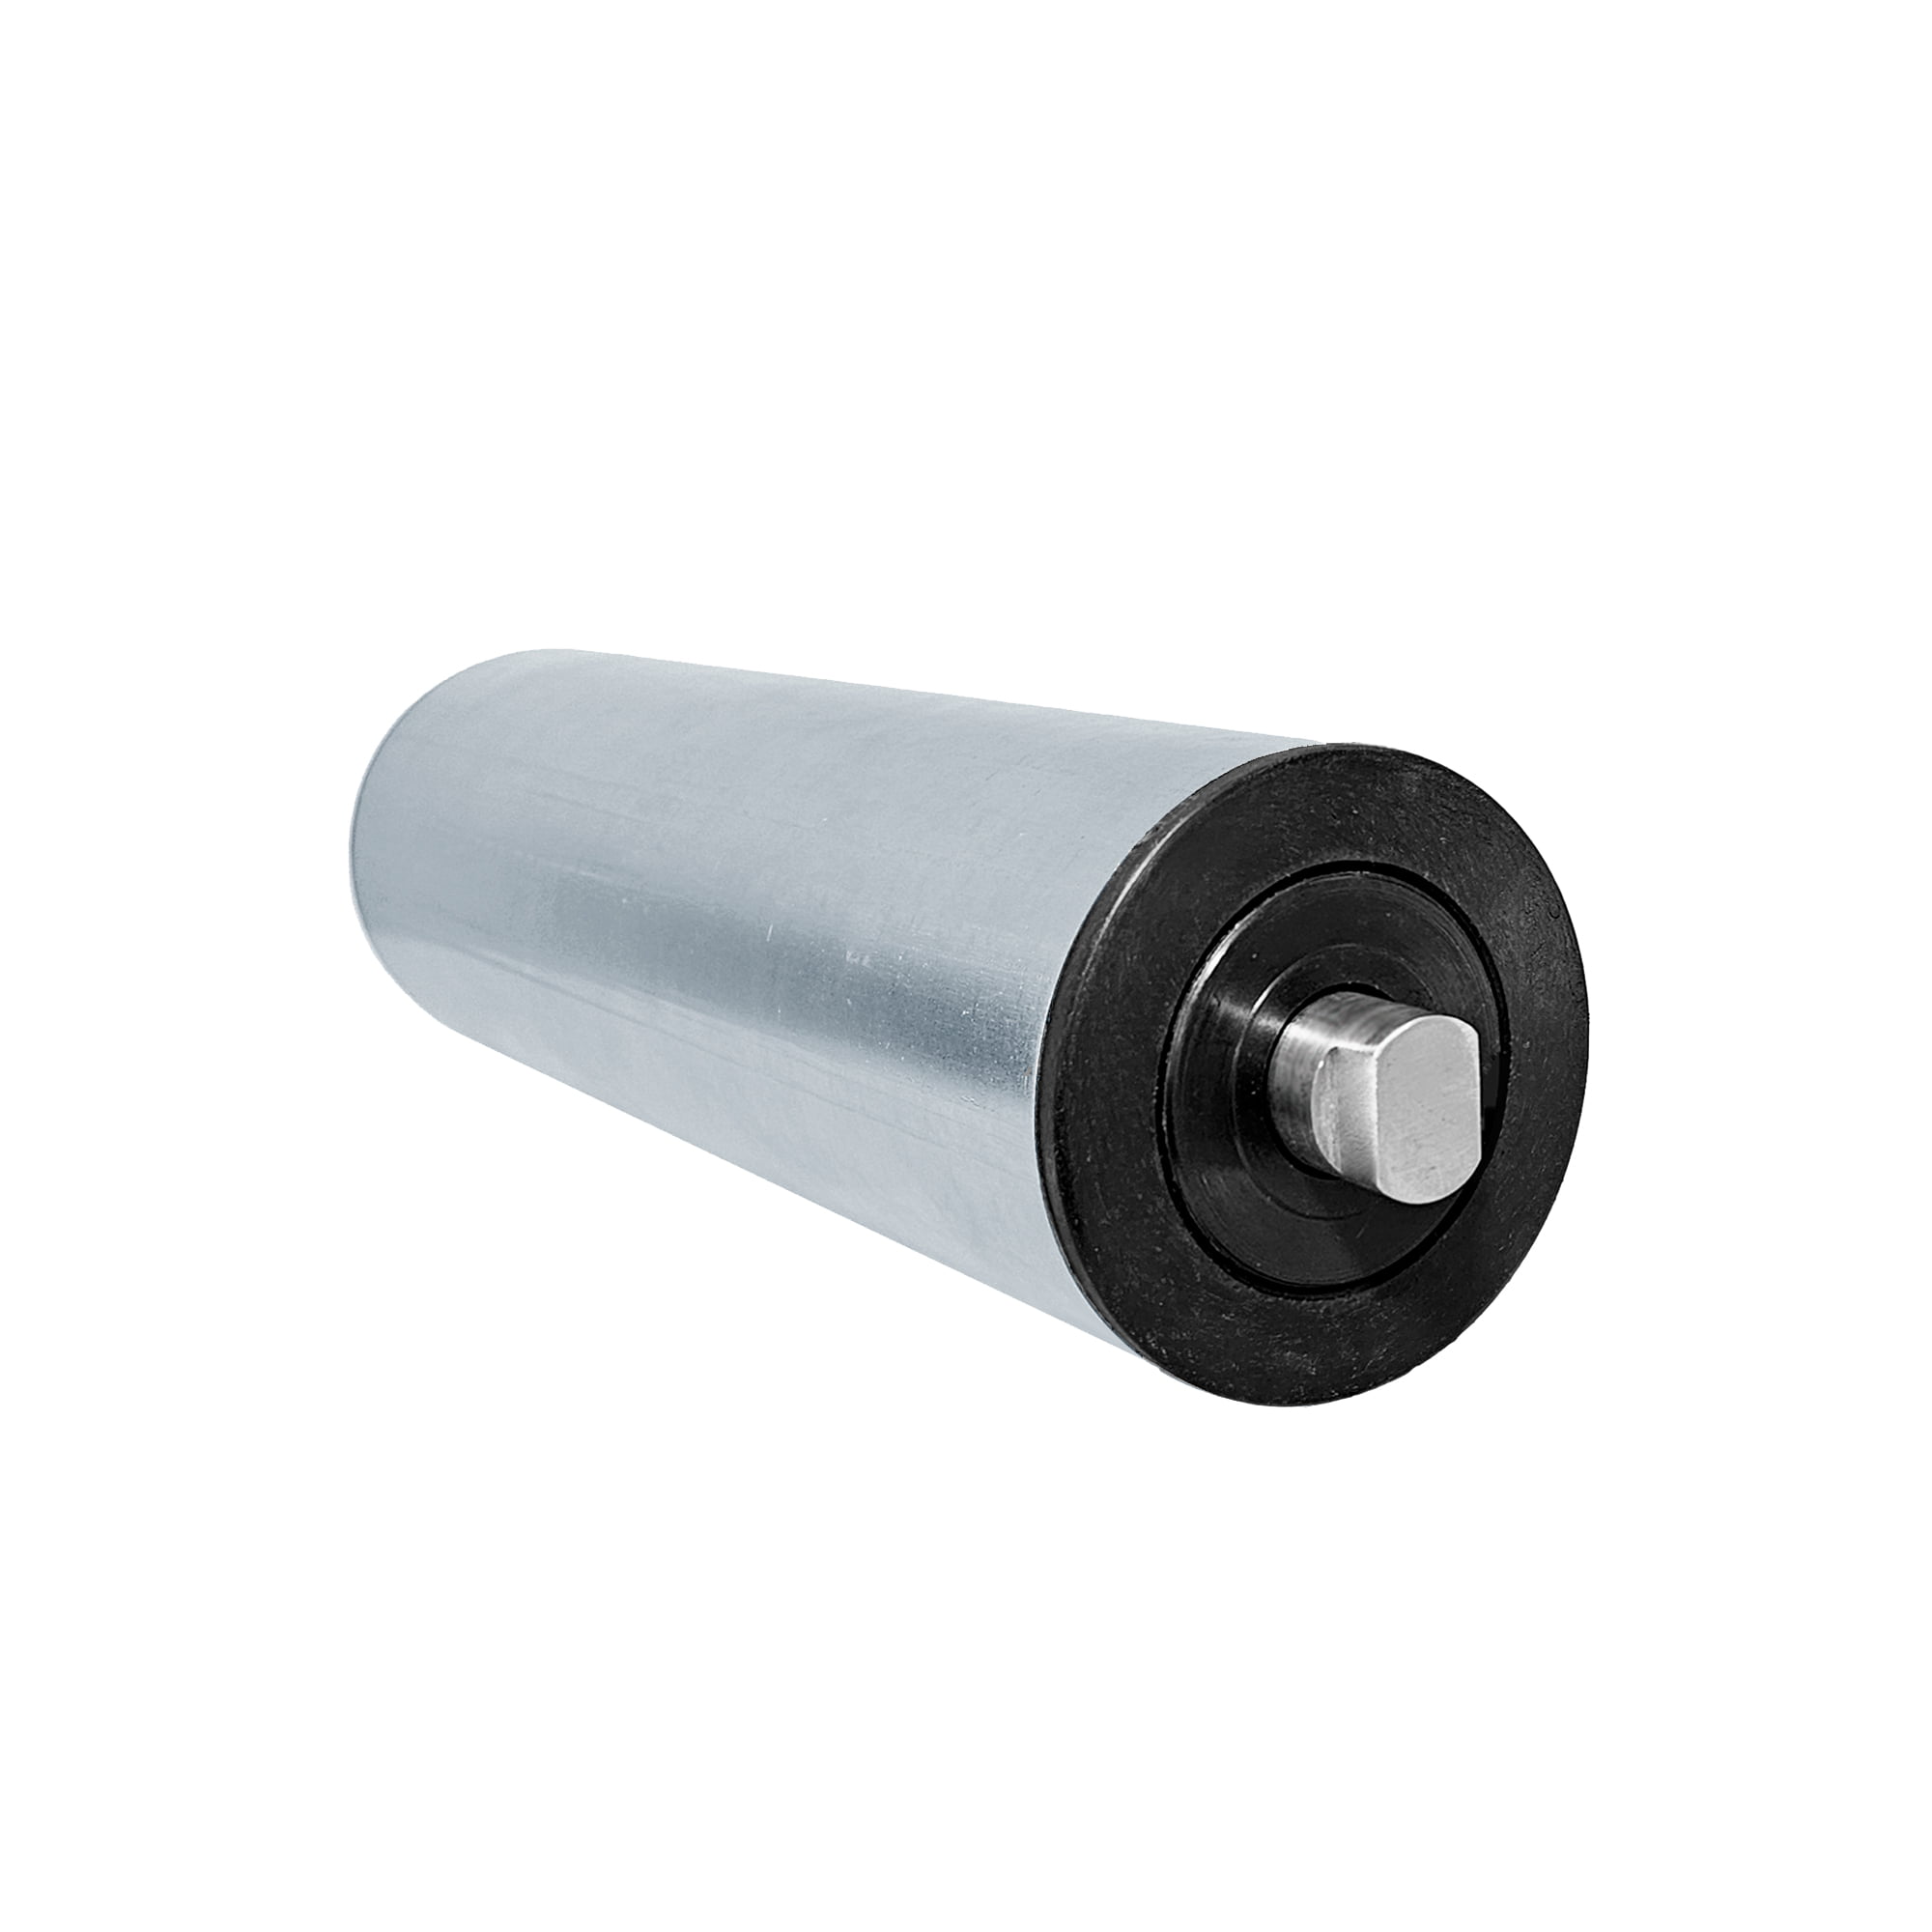 Rolete de Carga - Diâmetro tubo 76,2 mm - Comprimento tubo 440 mm